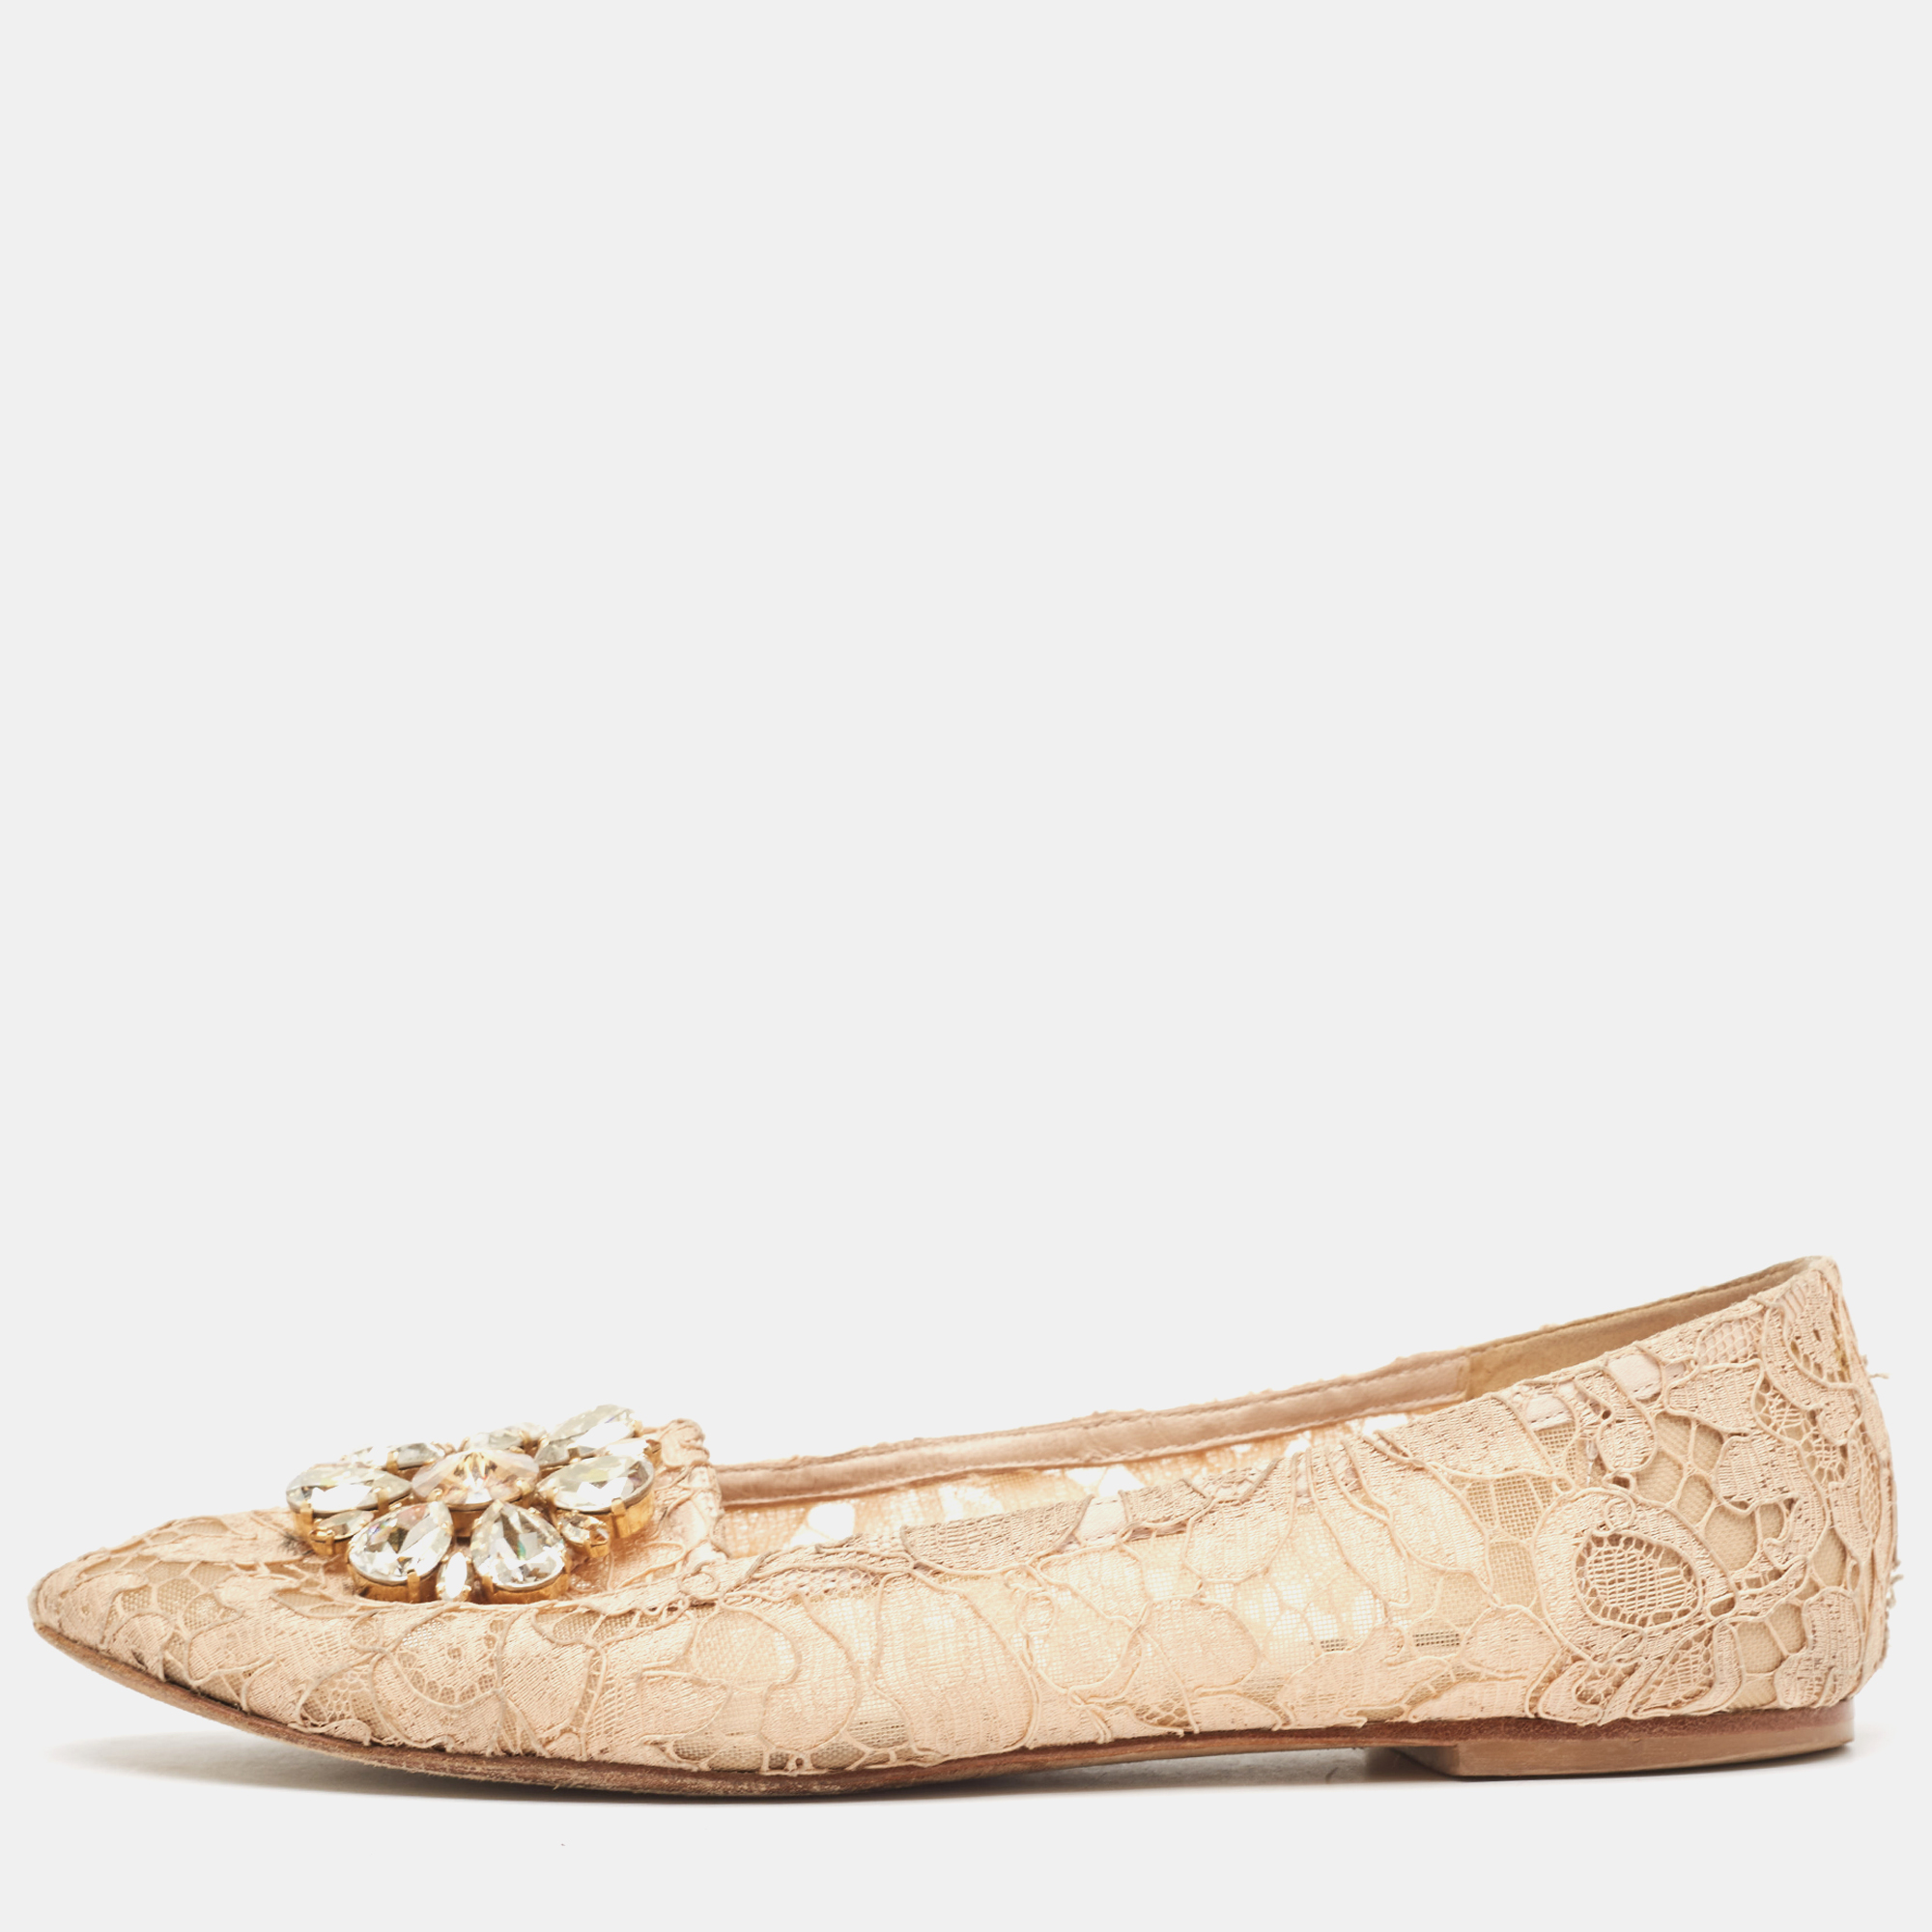 Dolce & gabbana beige lace crystal embellished taormina smoking slippers size 39